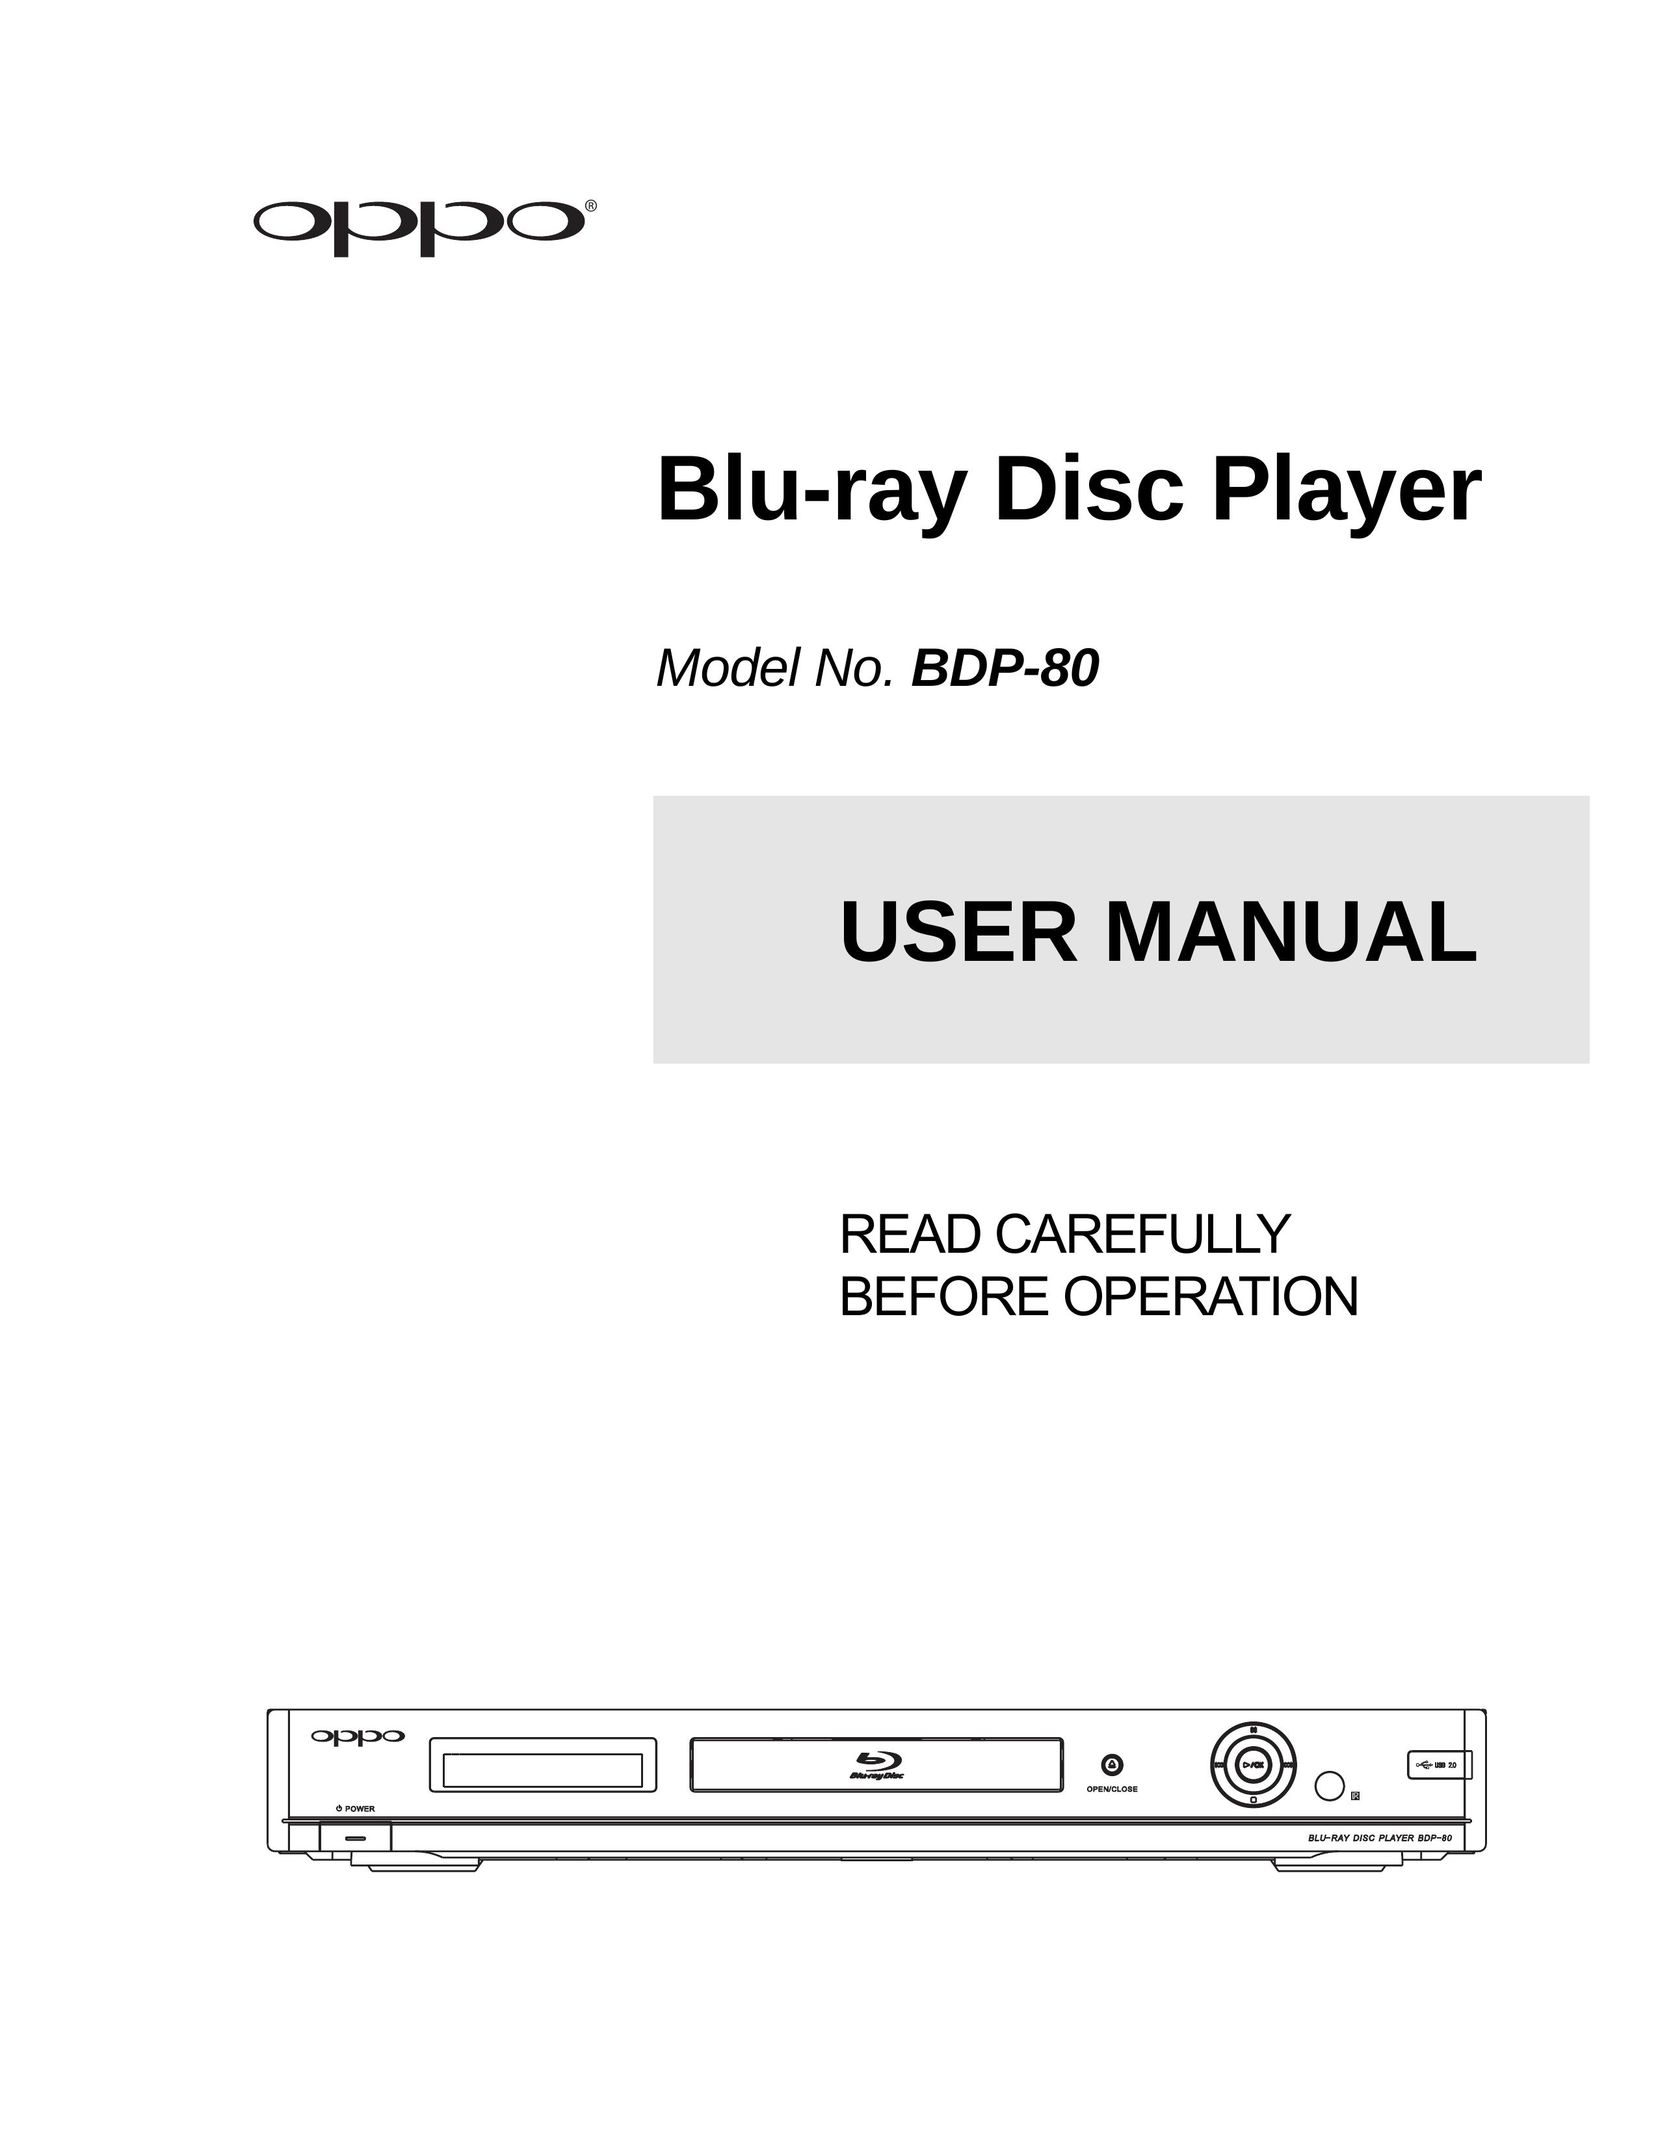 OPPO Digital BDP-80 Blu-ray Player User Manual